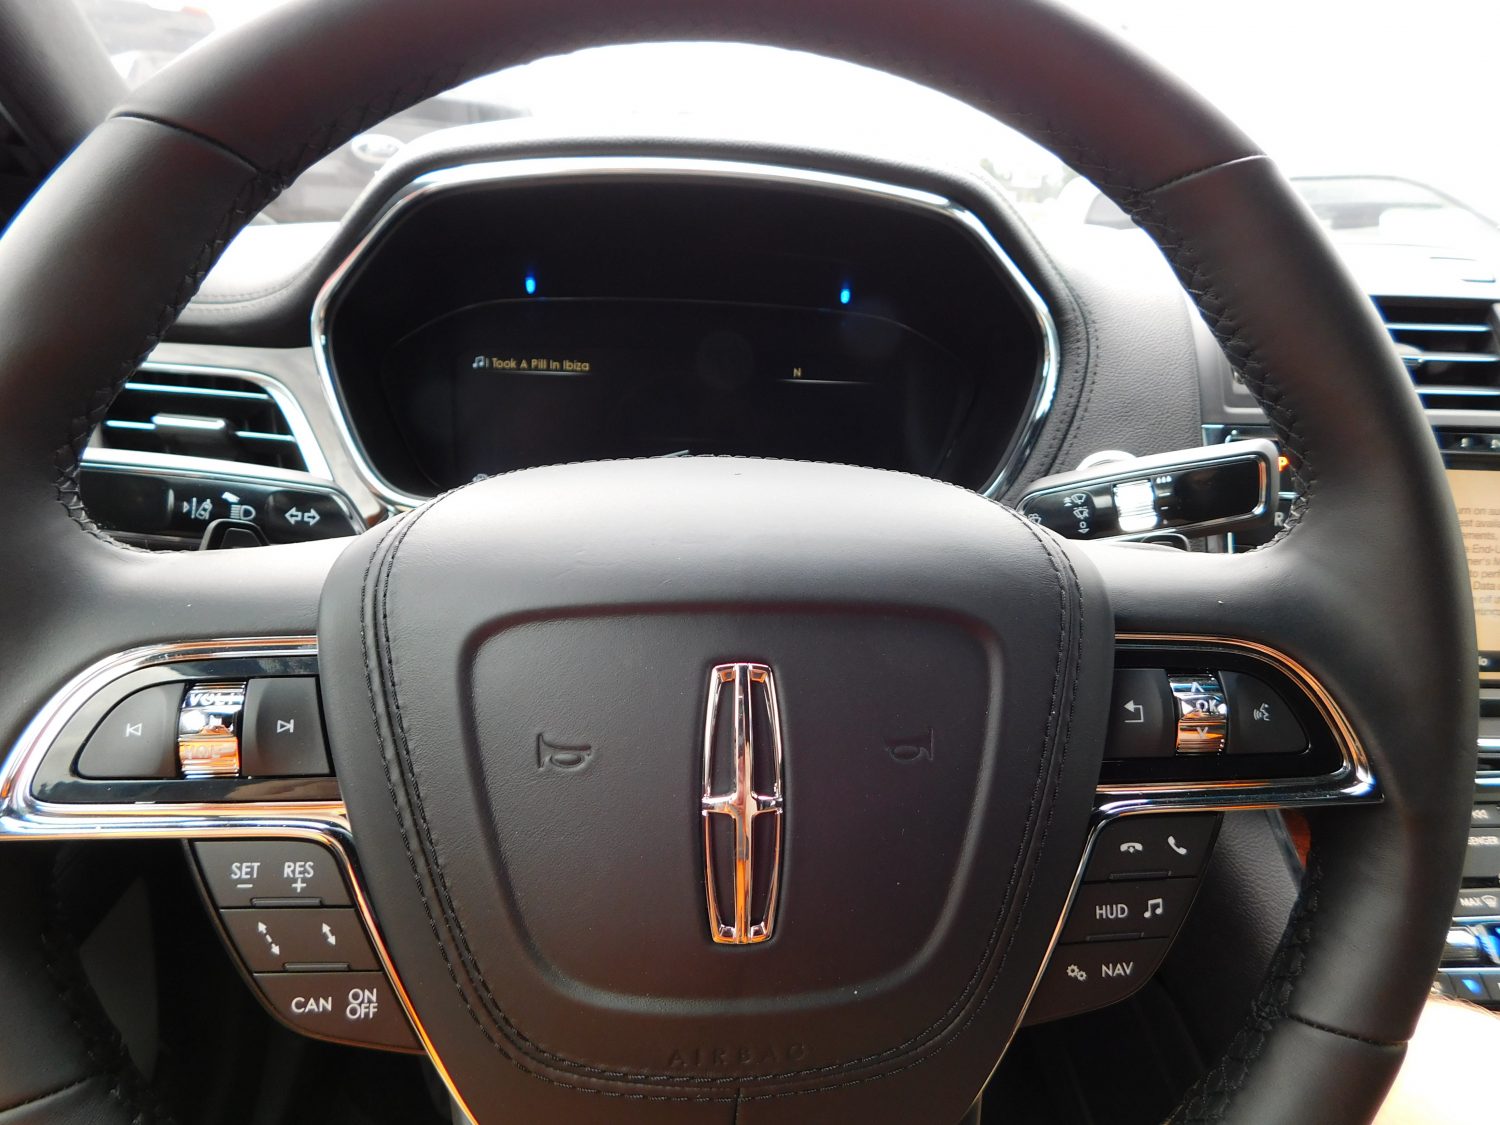 k40 radar detector and laser defusers alert leds on a 2017 Lincoln Continental